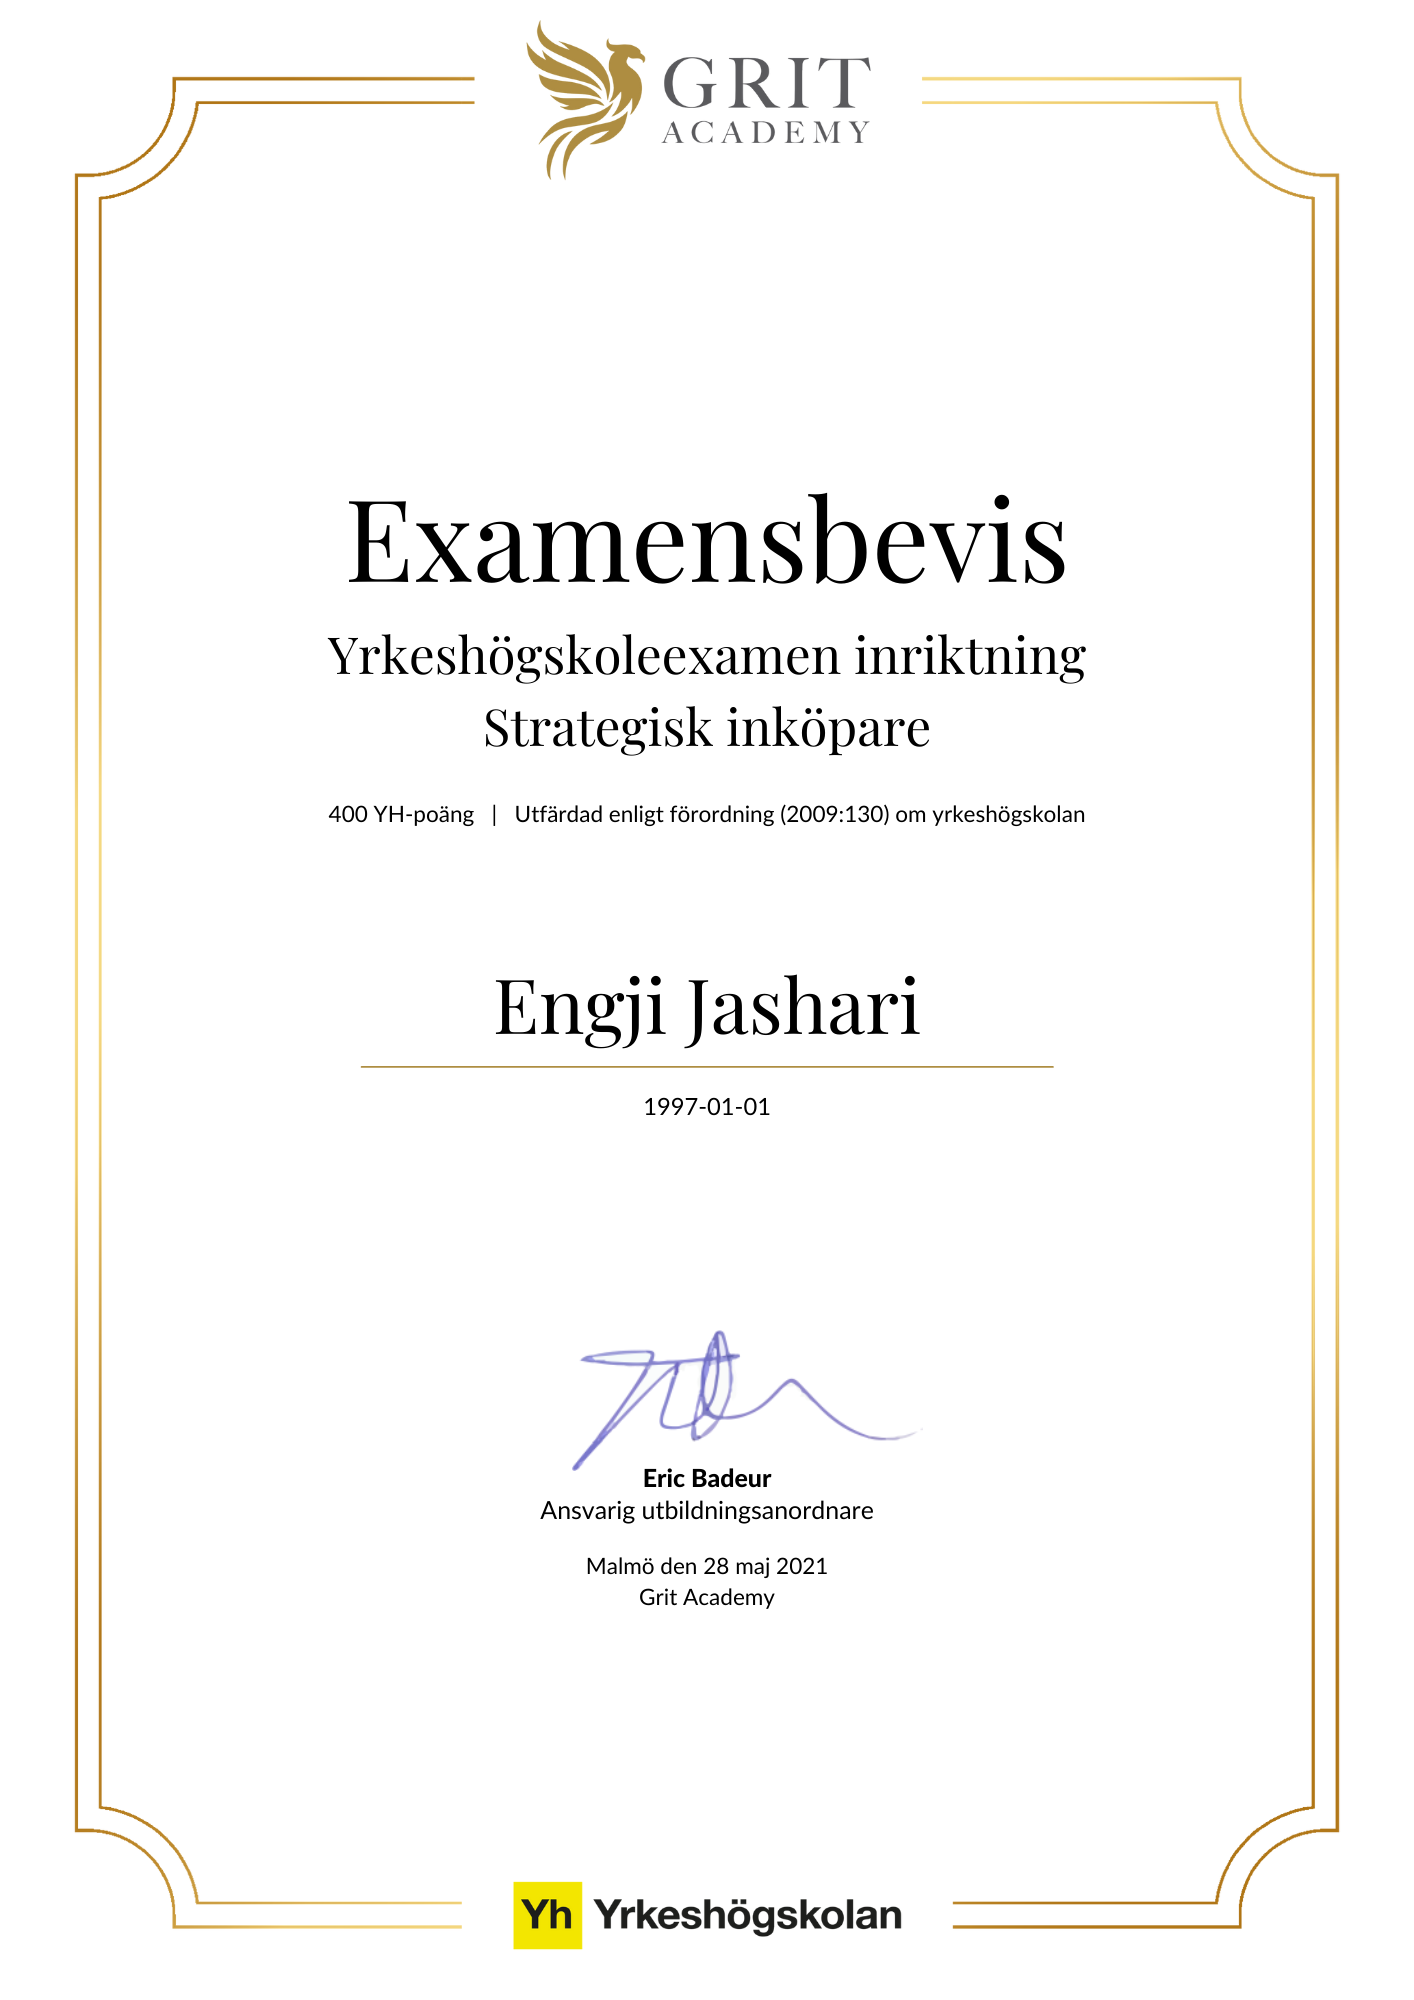 Examensbevis Engji Jashari - 1